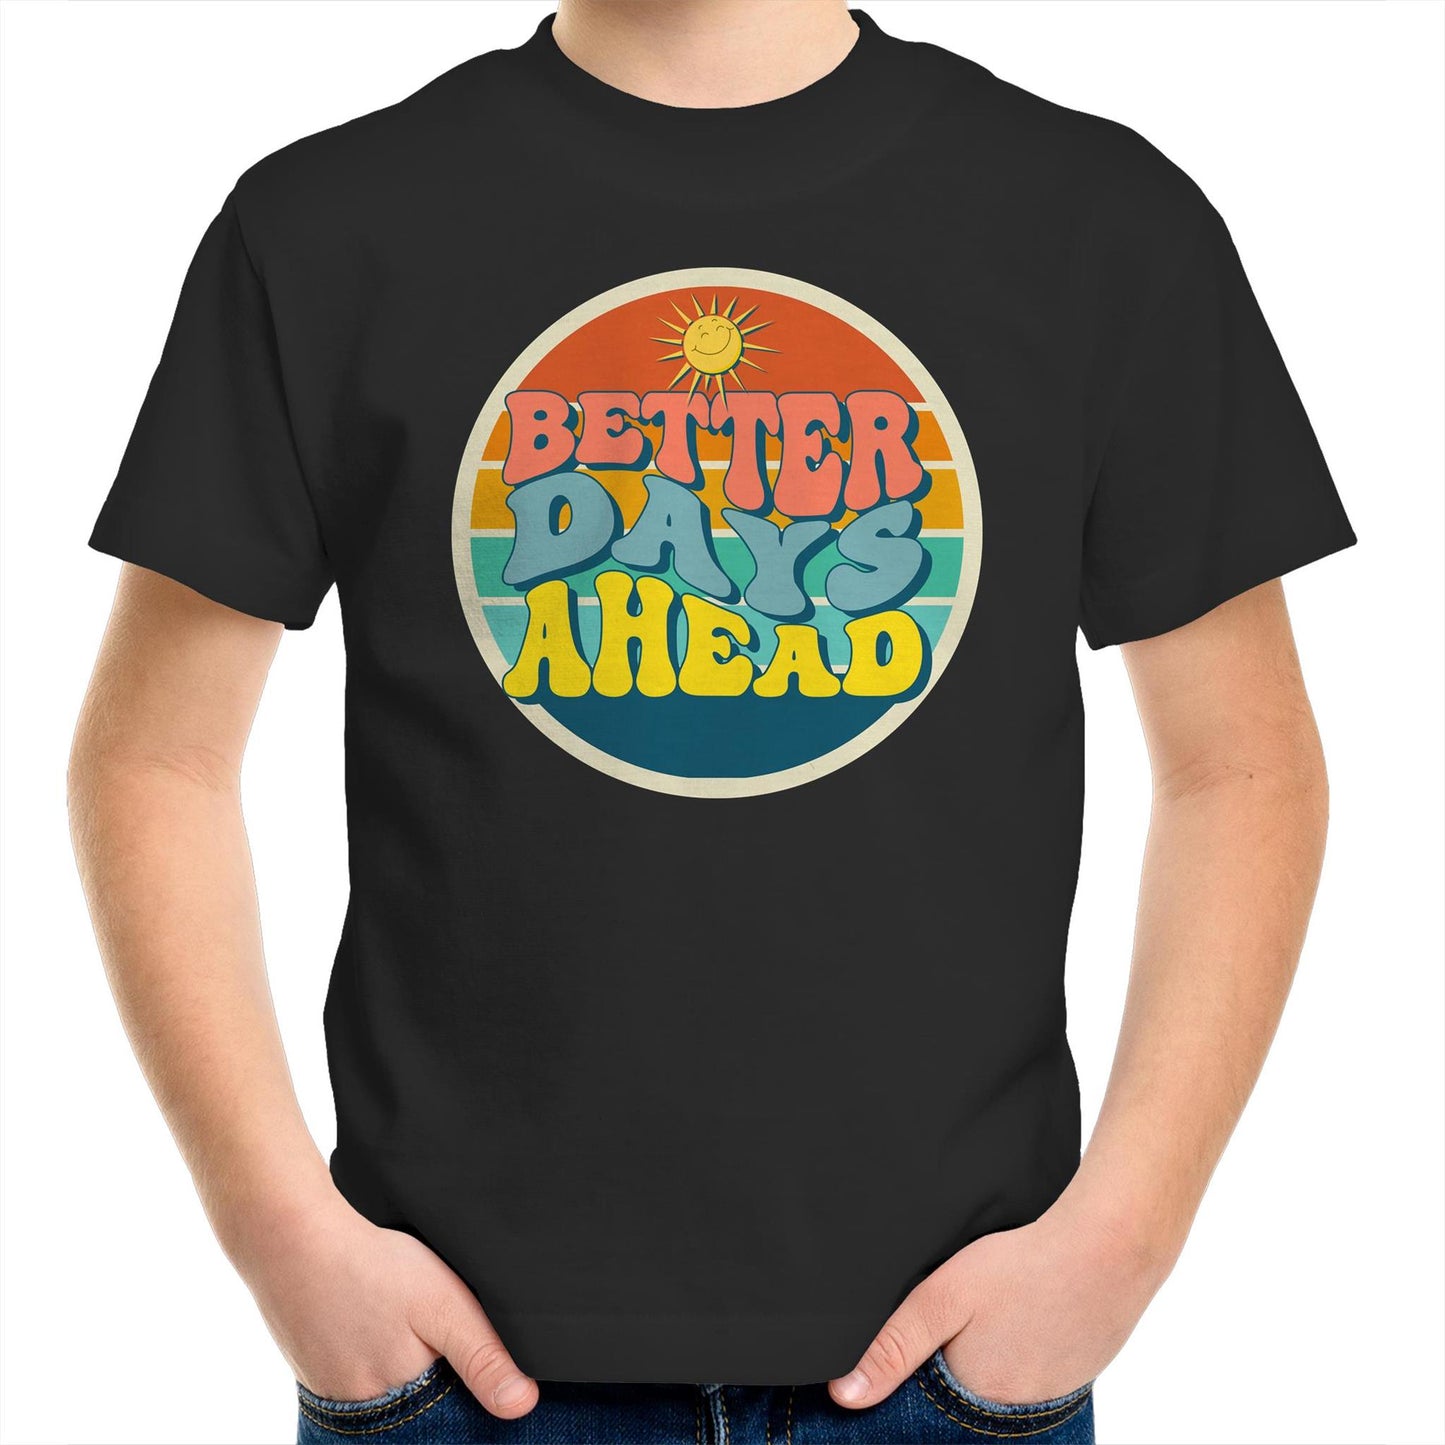 Better Days Ahead - Kids Youth T-Shirt Black Kids Youth T-shirt Motivation Retro